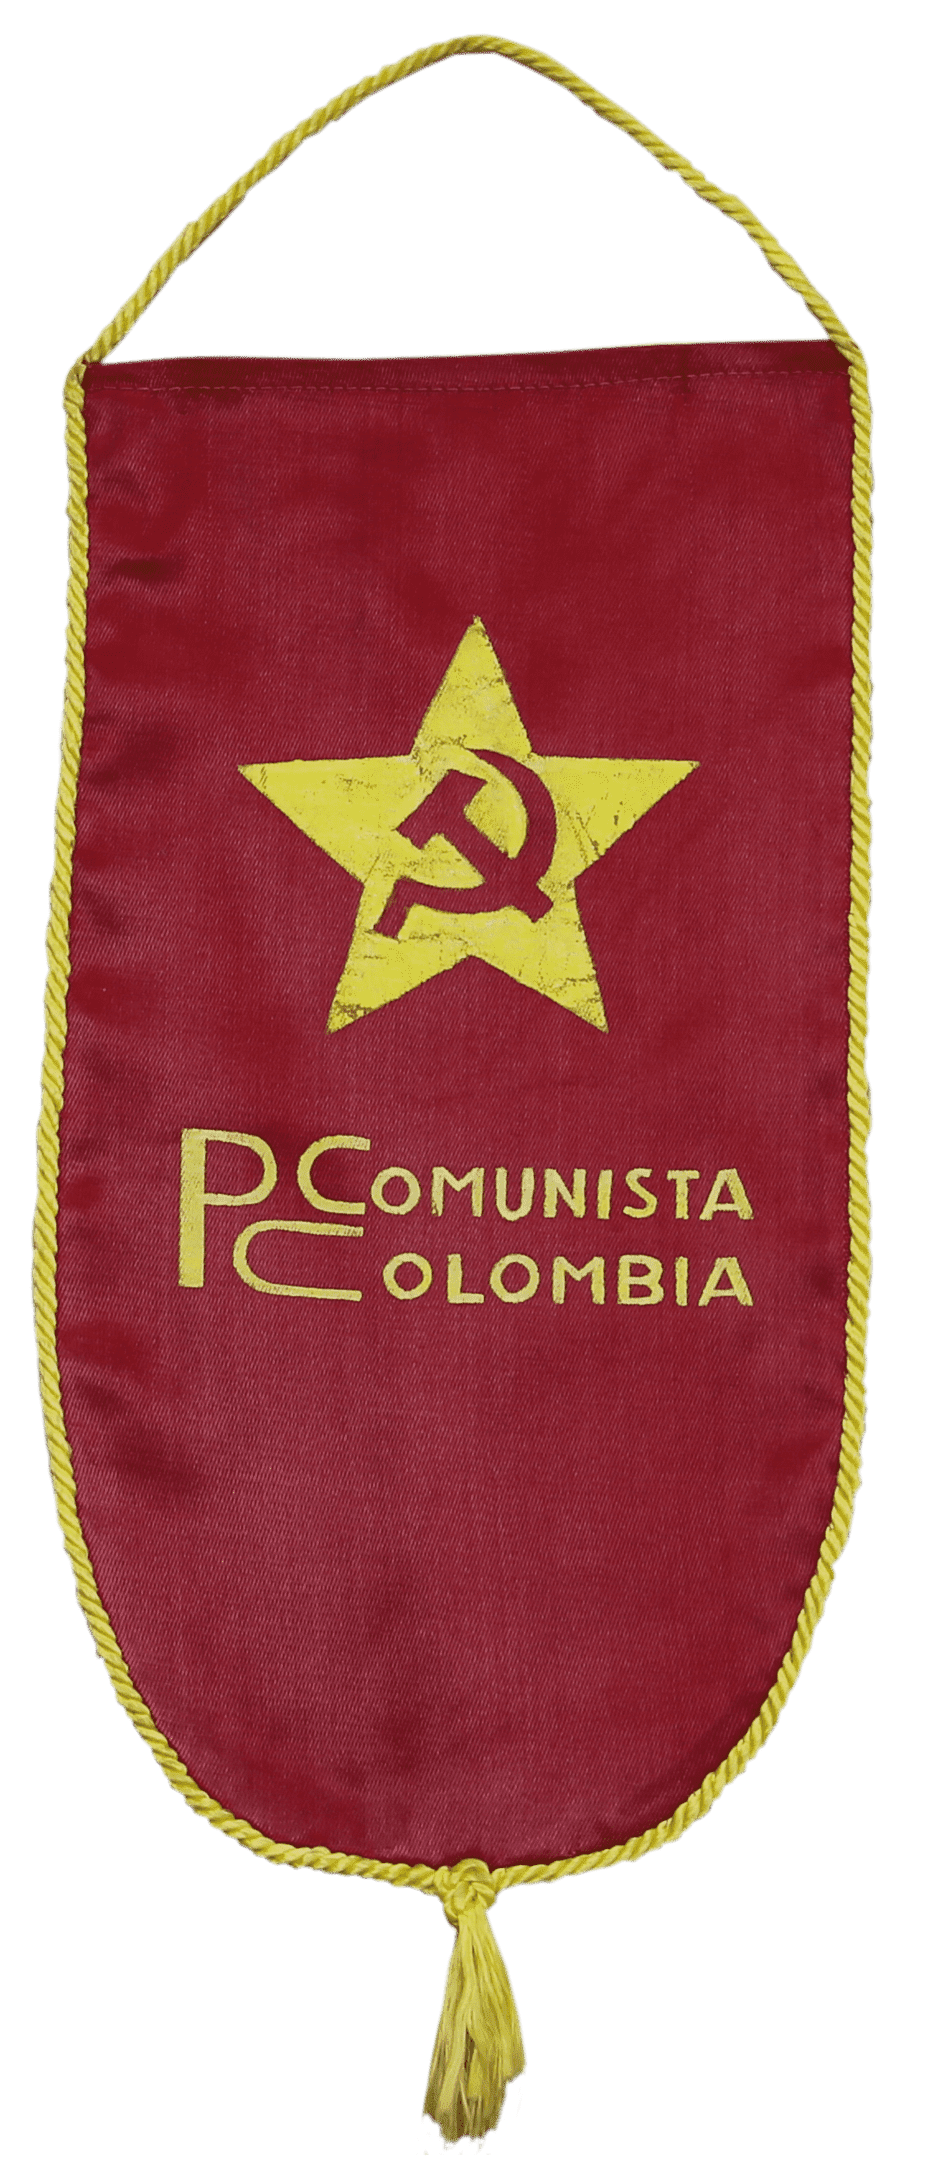 P Comunista Colombia 三角旗 斯大林格勒战役博物馆